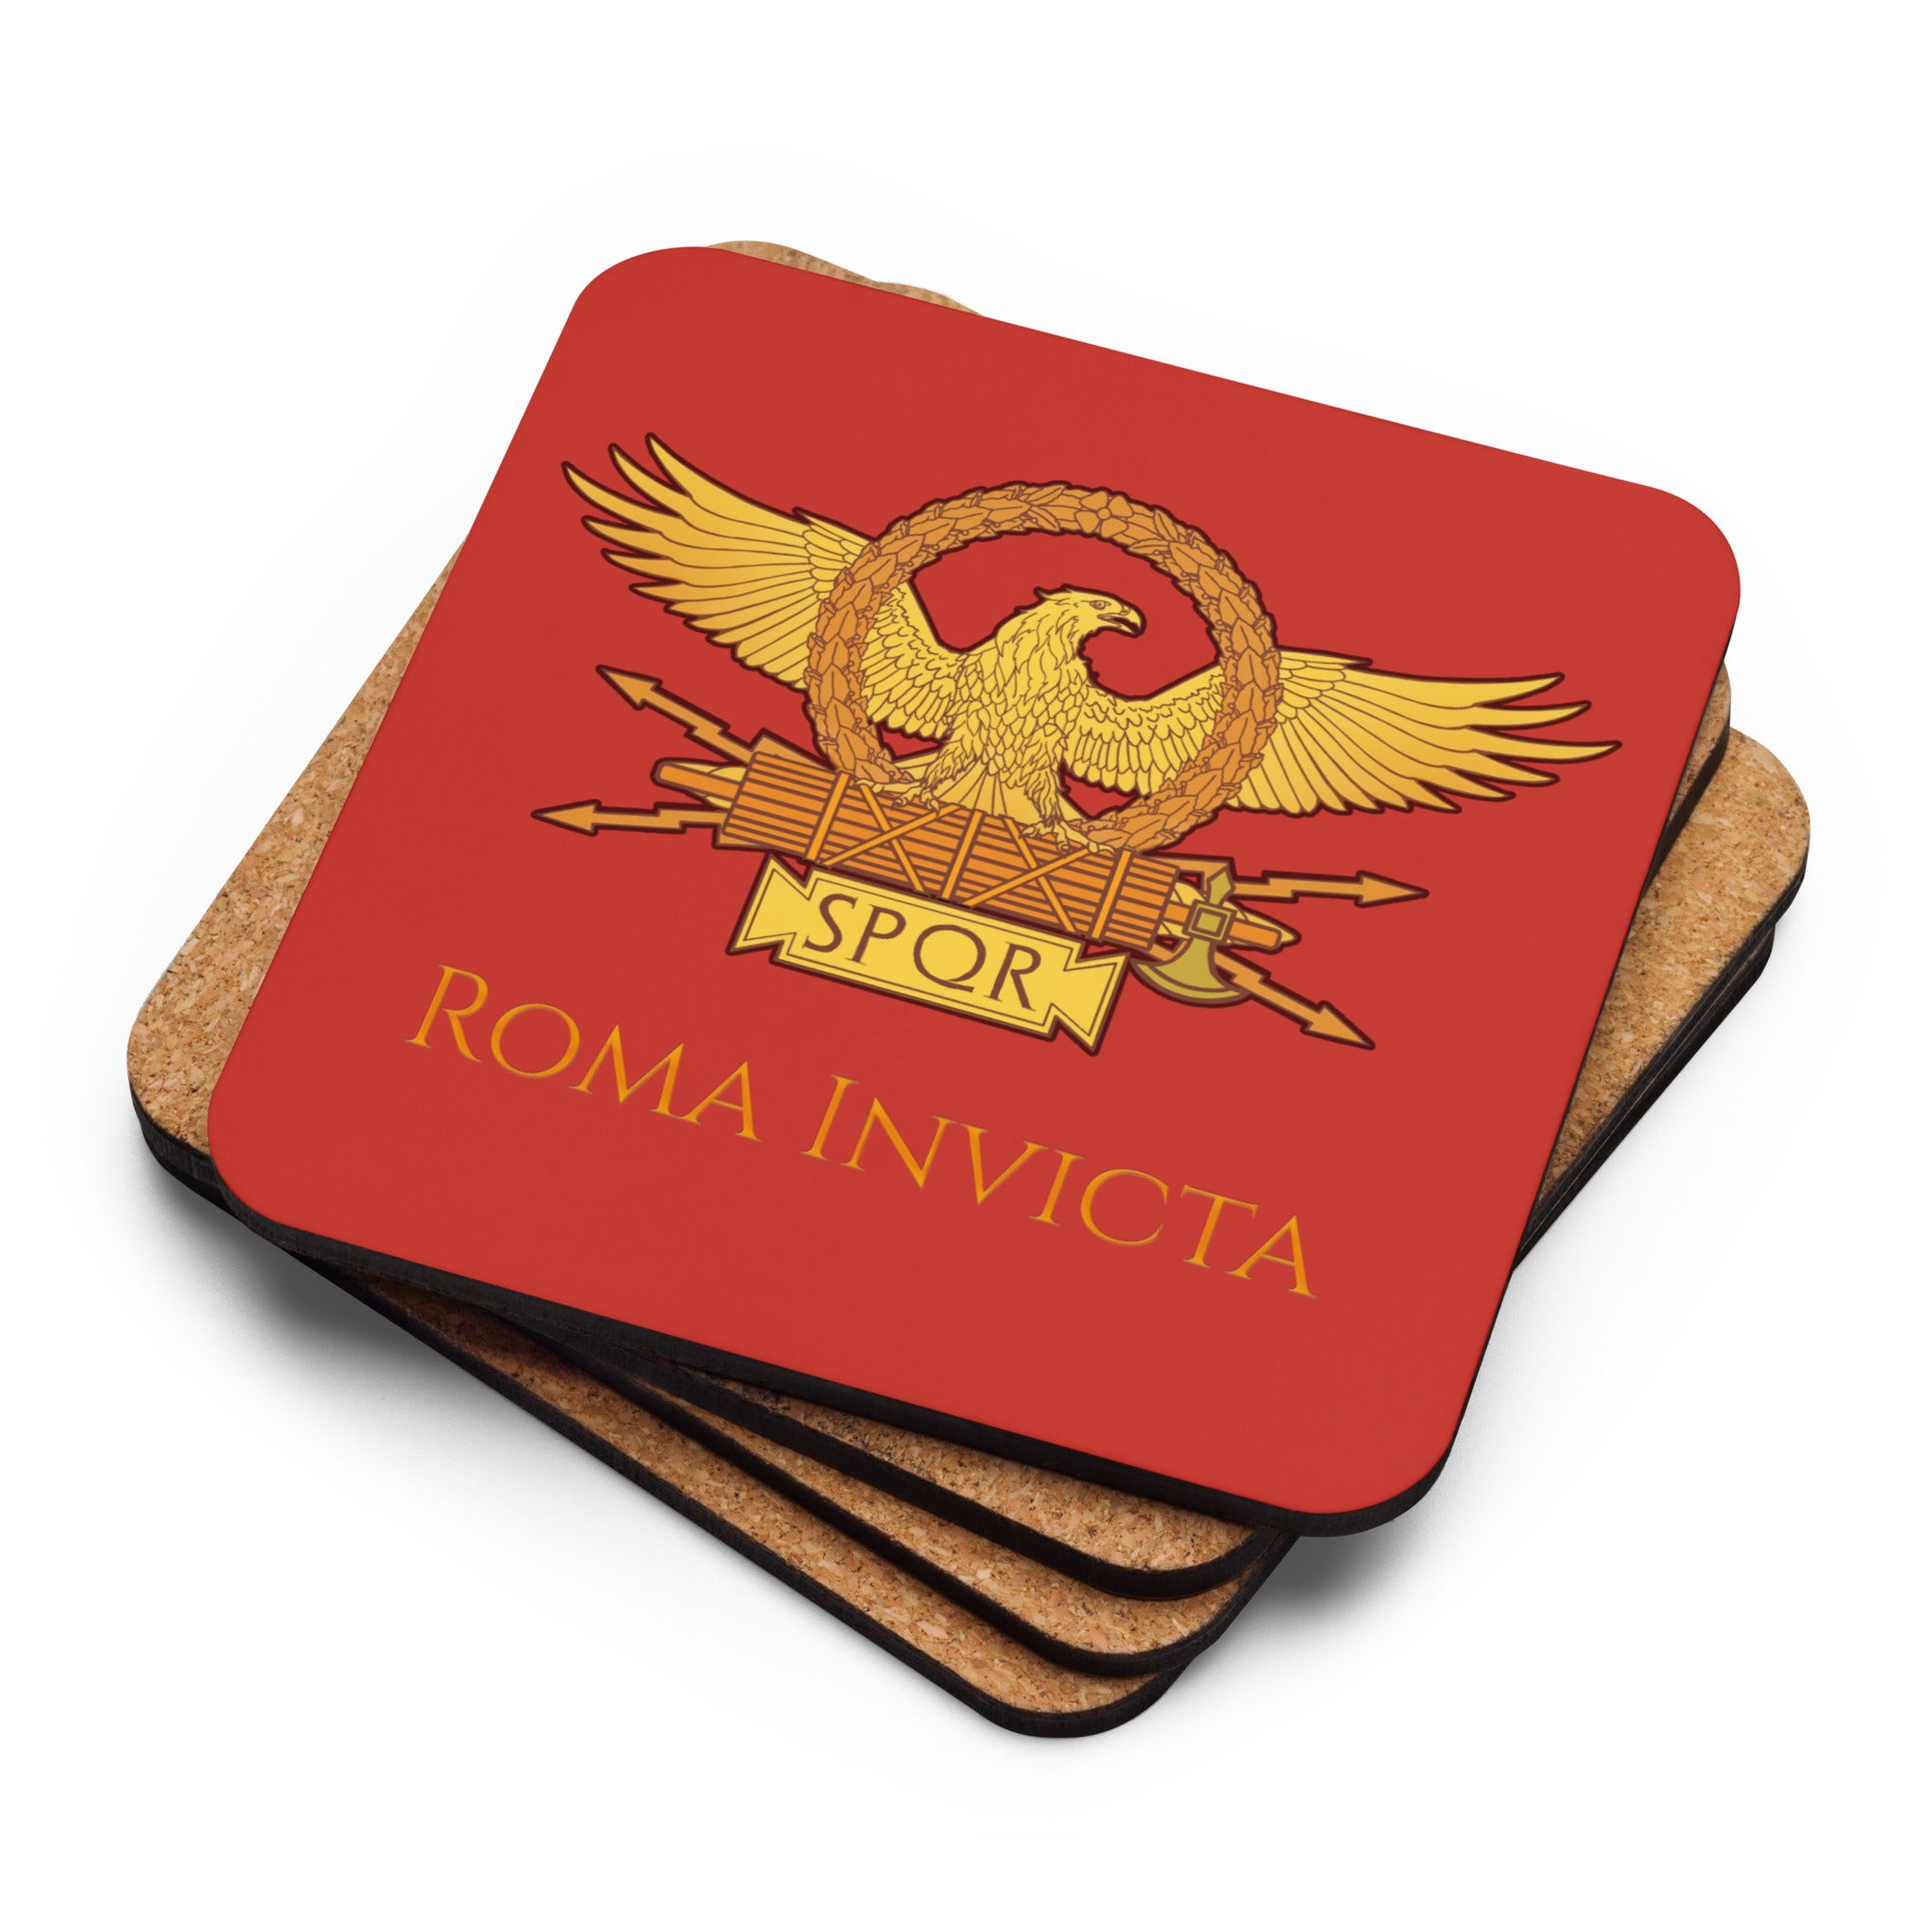 Roma Invicta - Ancient Rome Legionary Eagle Cork-Back Coaster (Red)